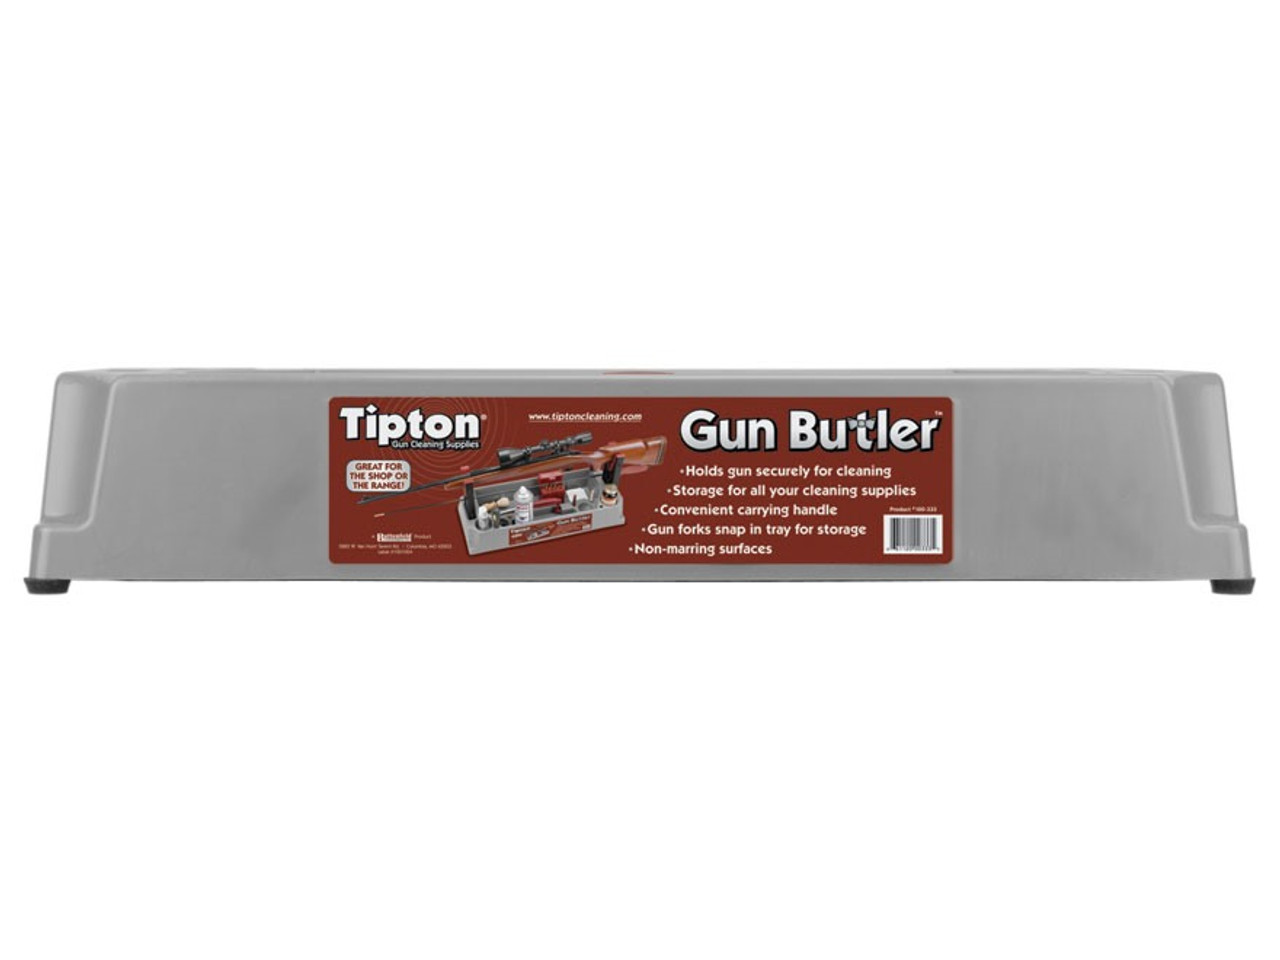 Tipton Gun Butler Cleaning and Maintenance Center